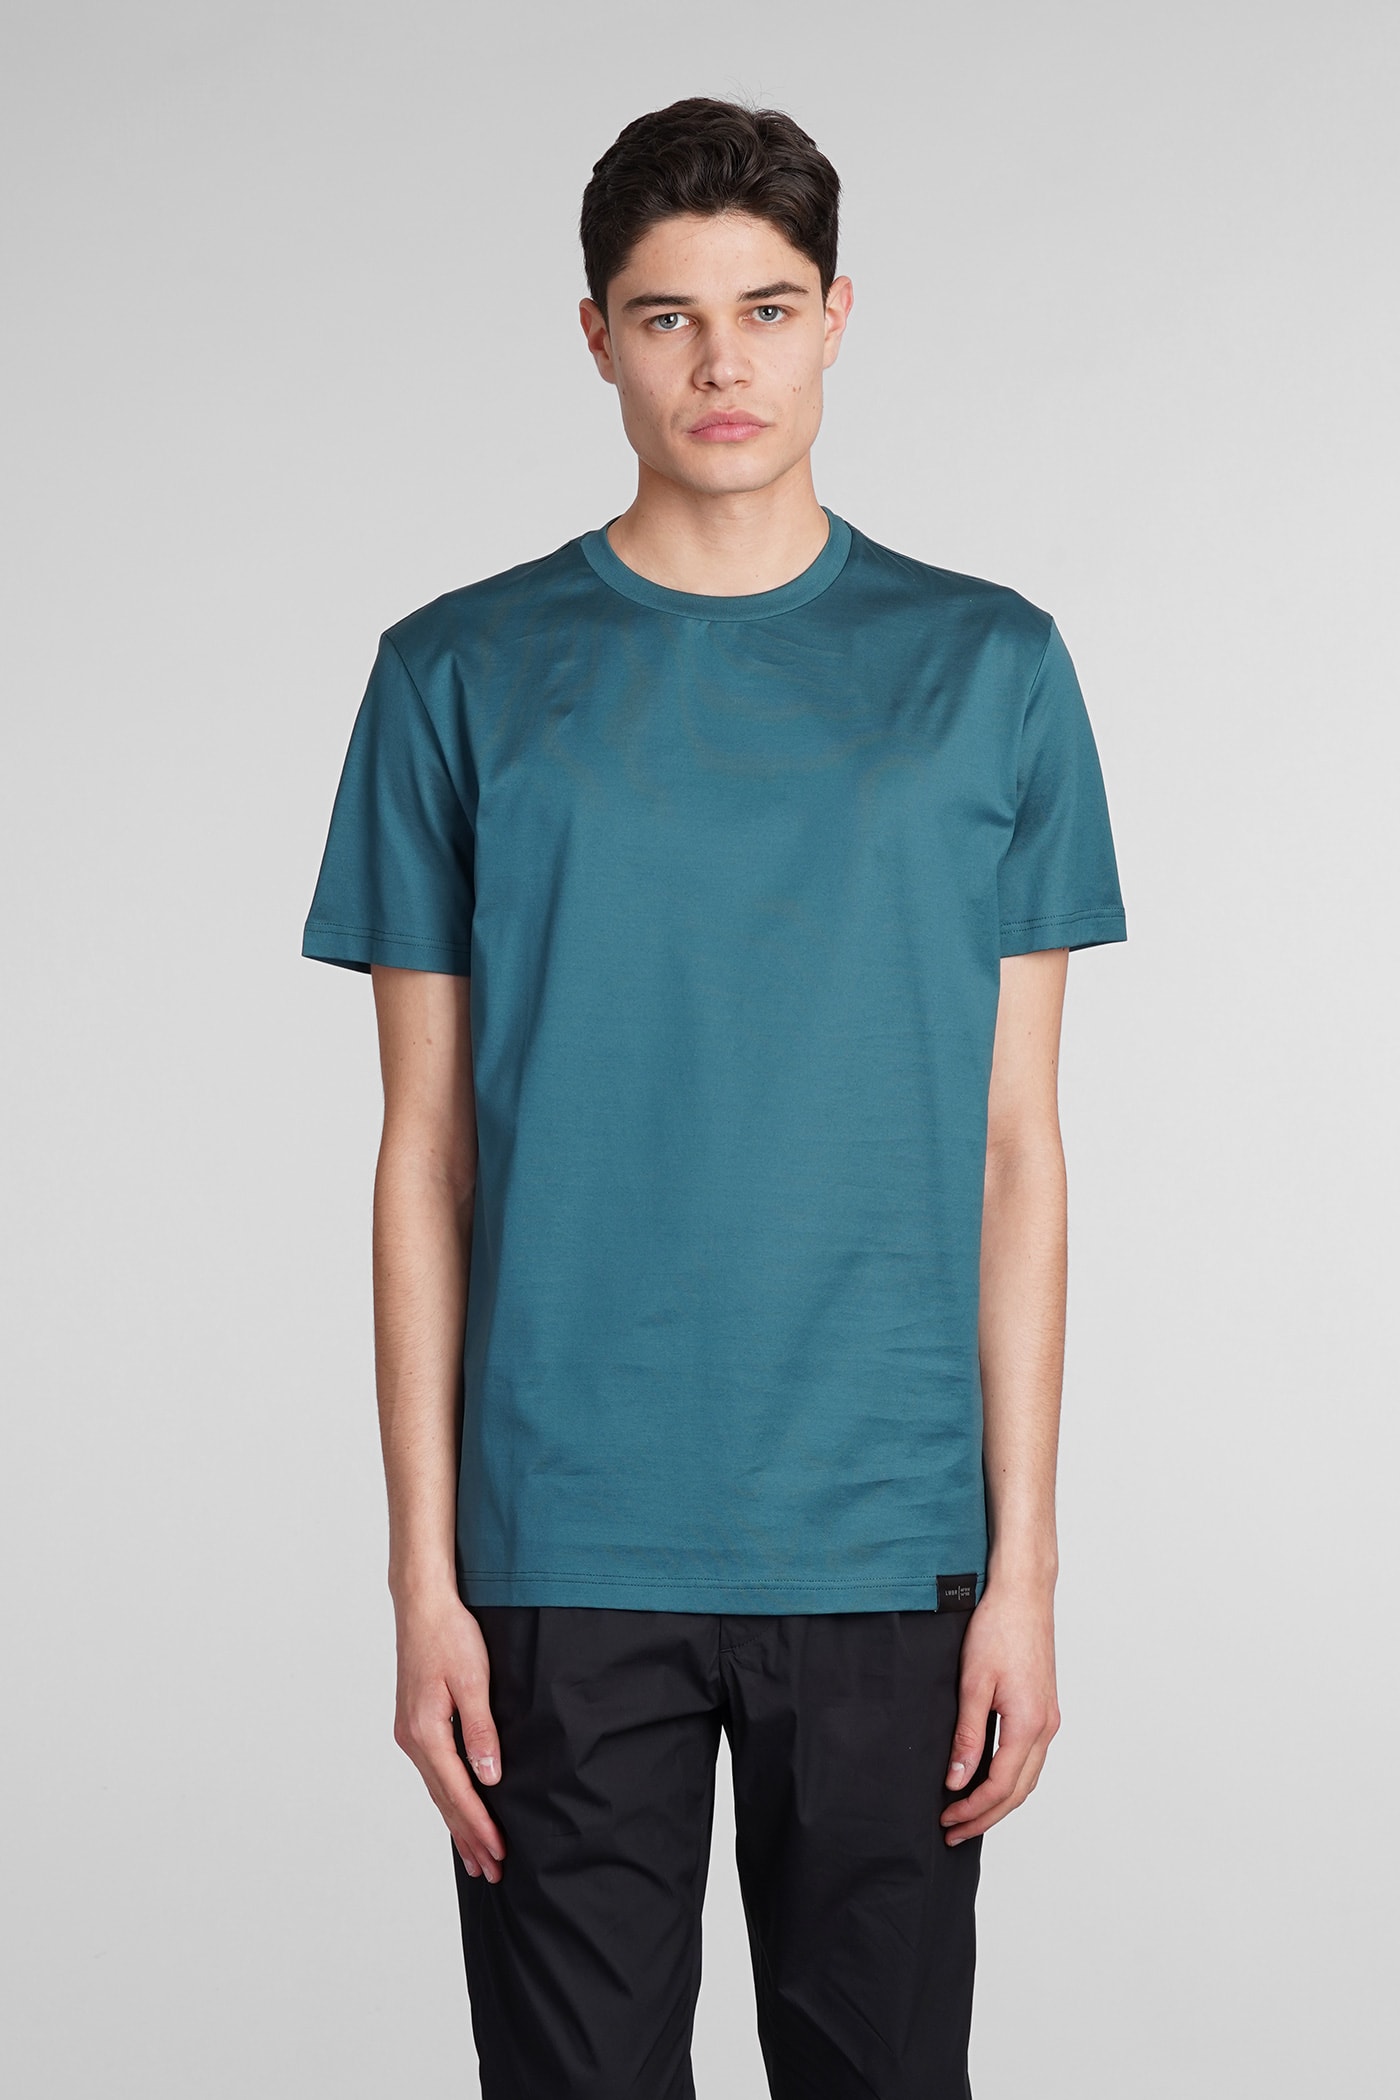 B134 Basic T-shirt In Green Cotton